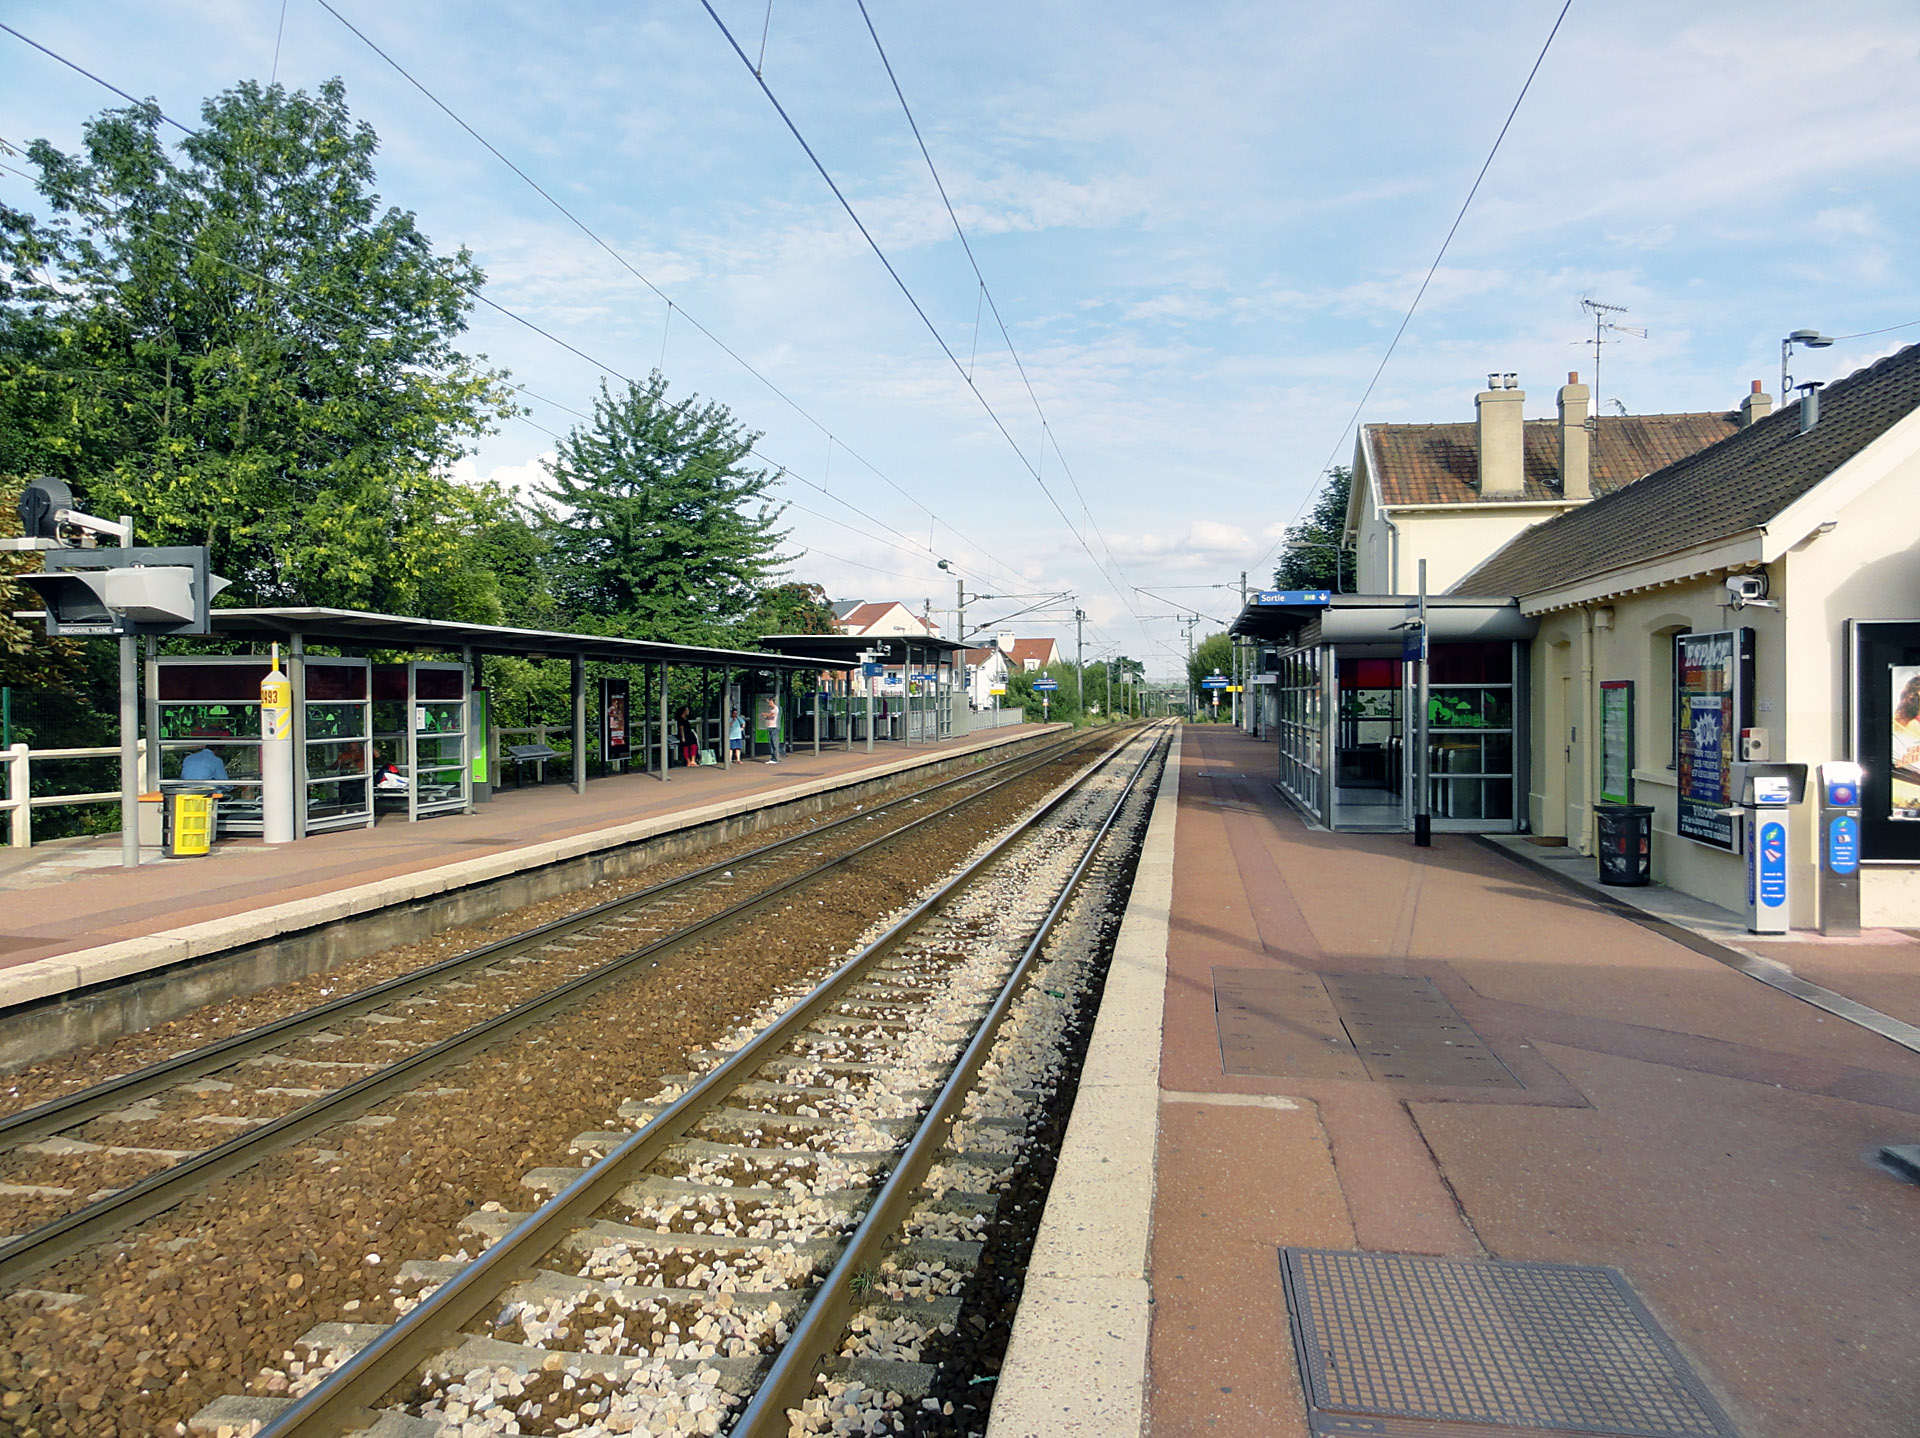 Gare de Domont